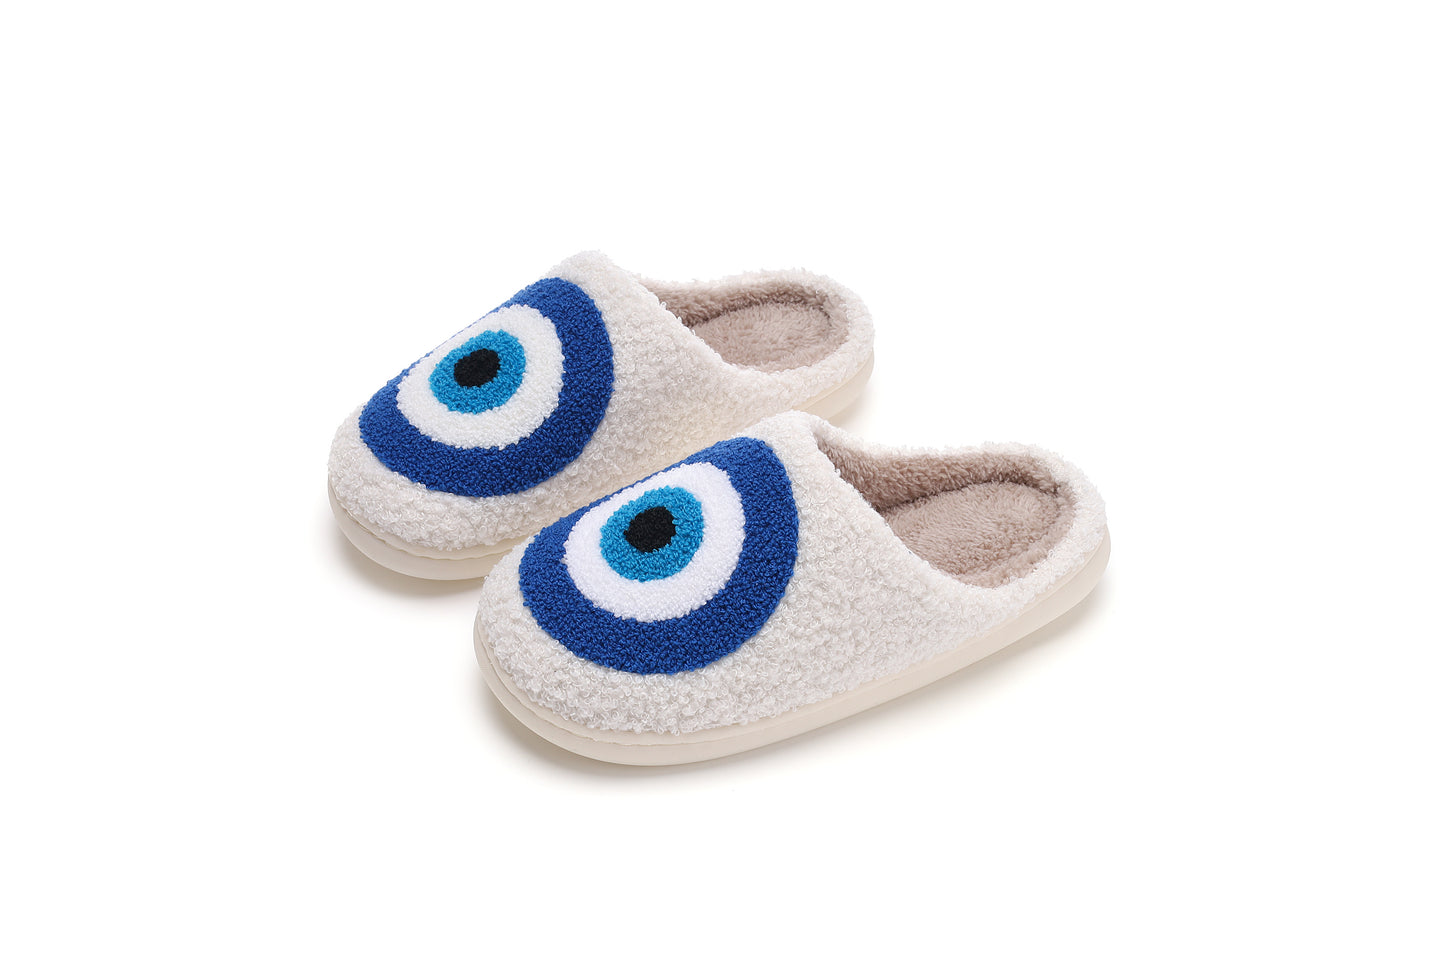 Blue Evileye Illustrated Comfort Cozy Plush Fluffy Fur Slip On Cushion Slippers